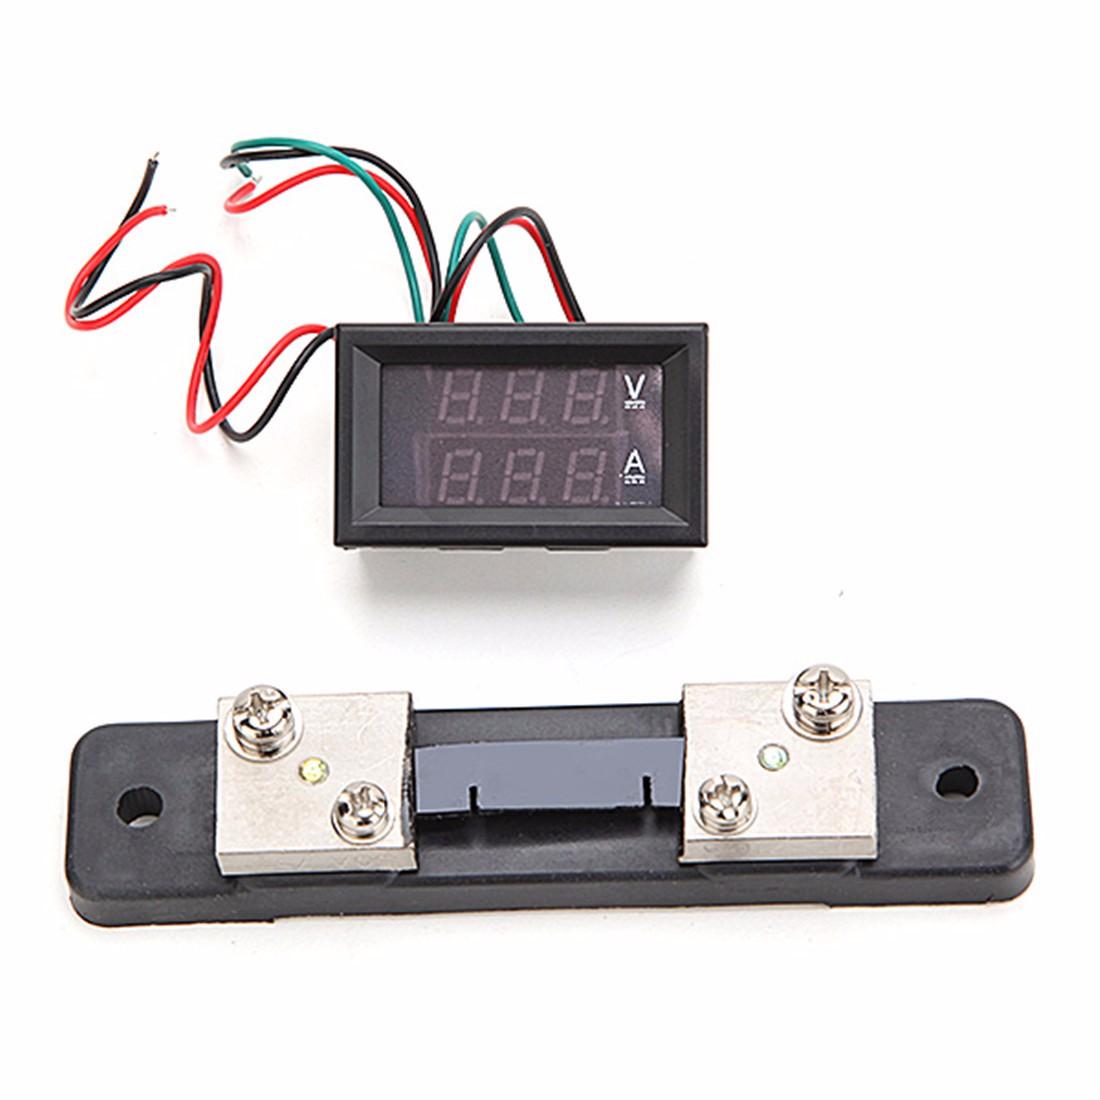 

3pcs Mini Digital Blue + Red-led DC Current Meter Voltmeter With 50A Ampere Shunt